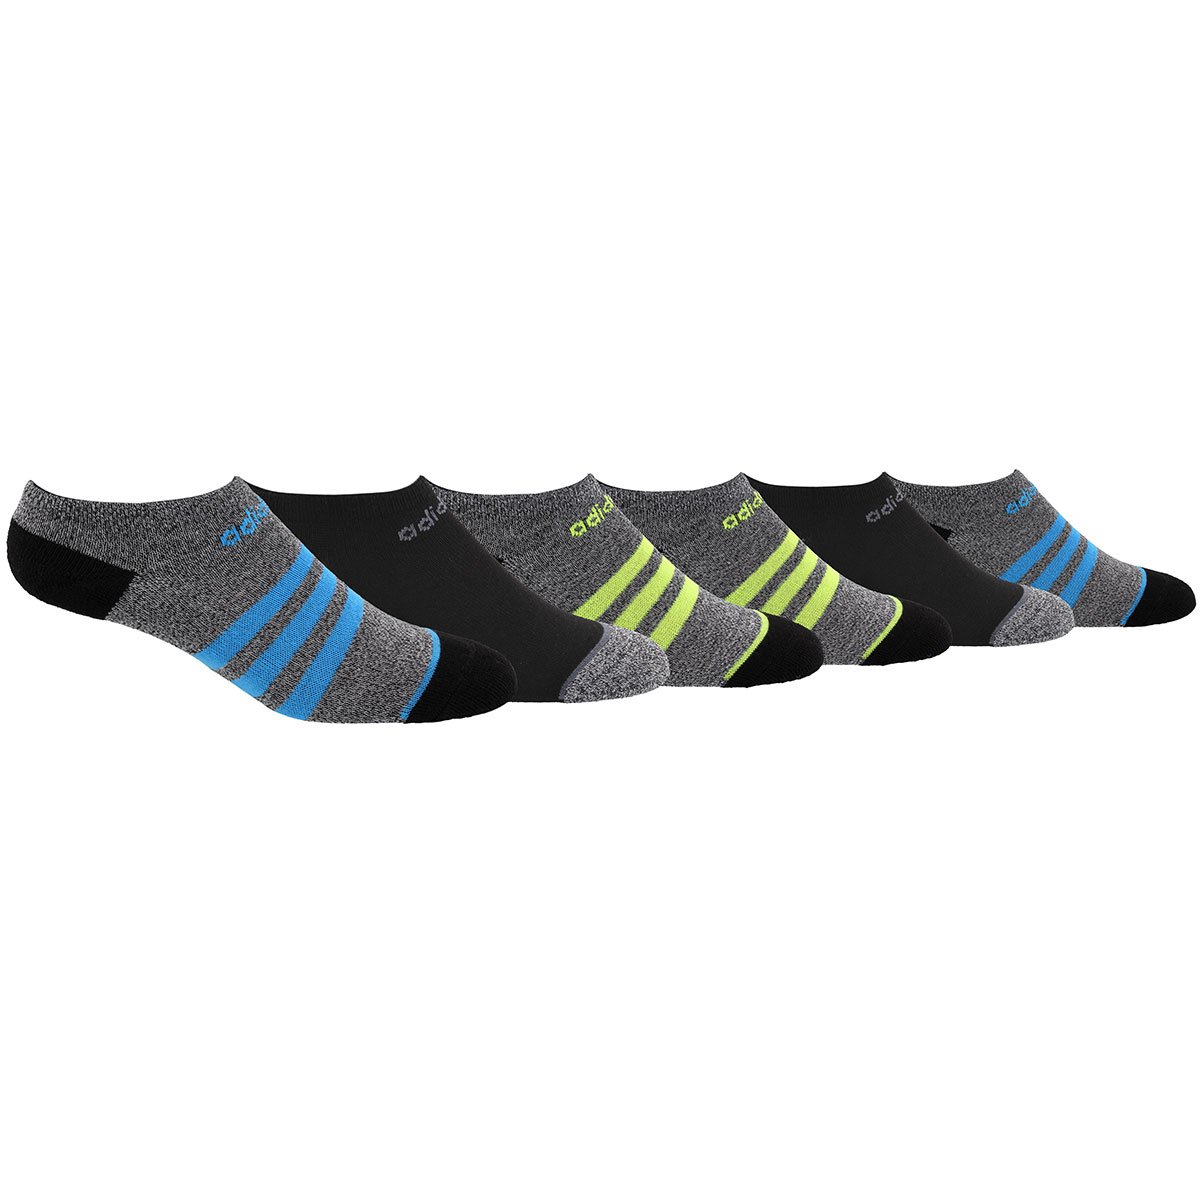 Adidas Boys' 3 Stripe No Show Socks, 6-Pack